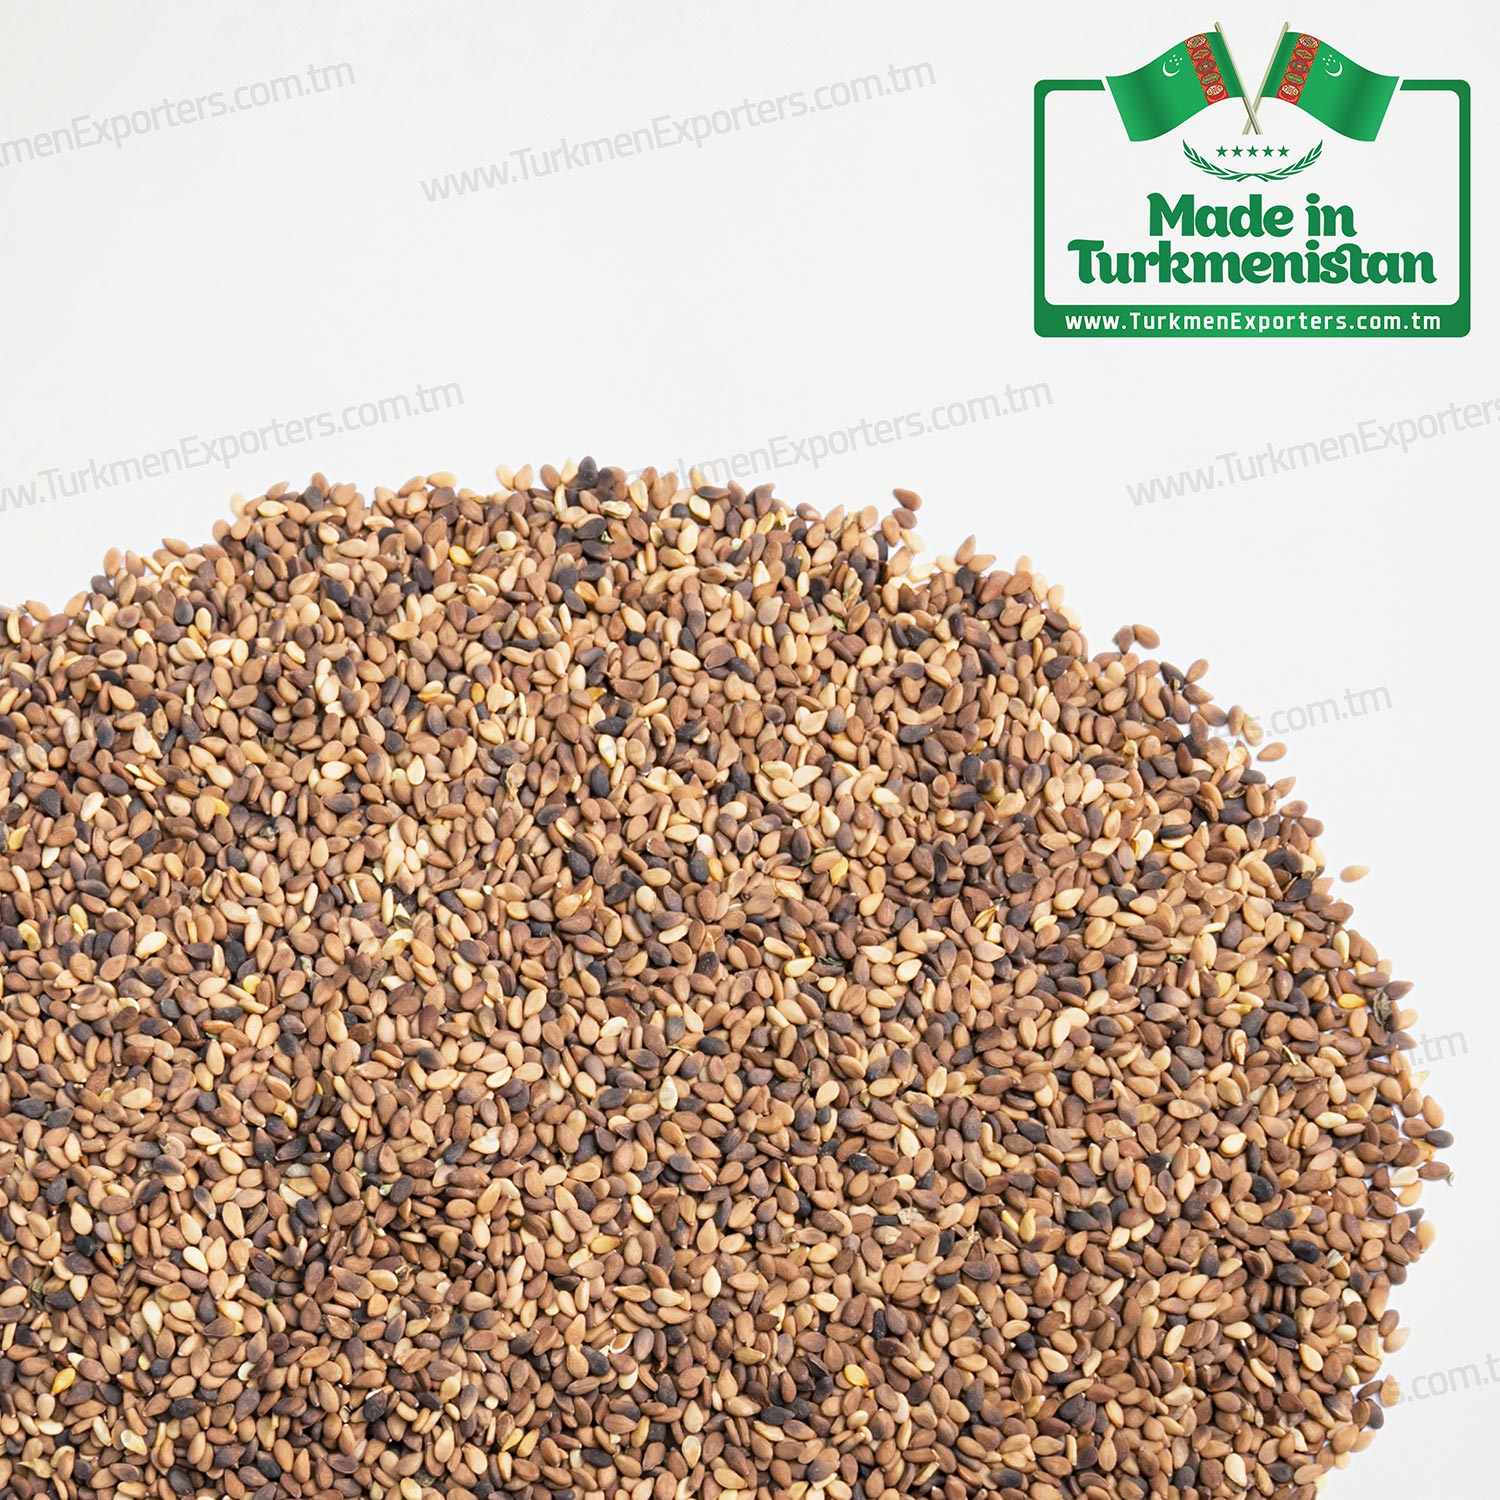 Sesame seeds in Turkmenistan wholesale for export | Agricultural complex of Turkmenistan